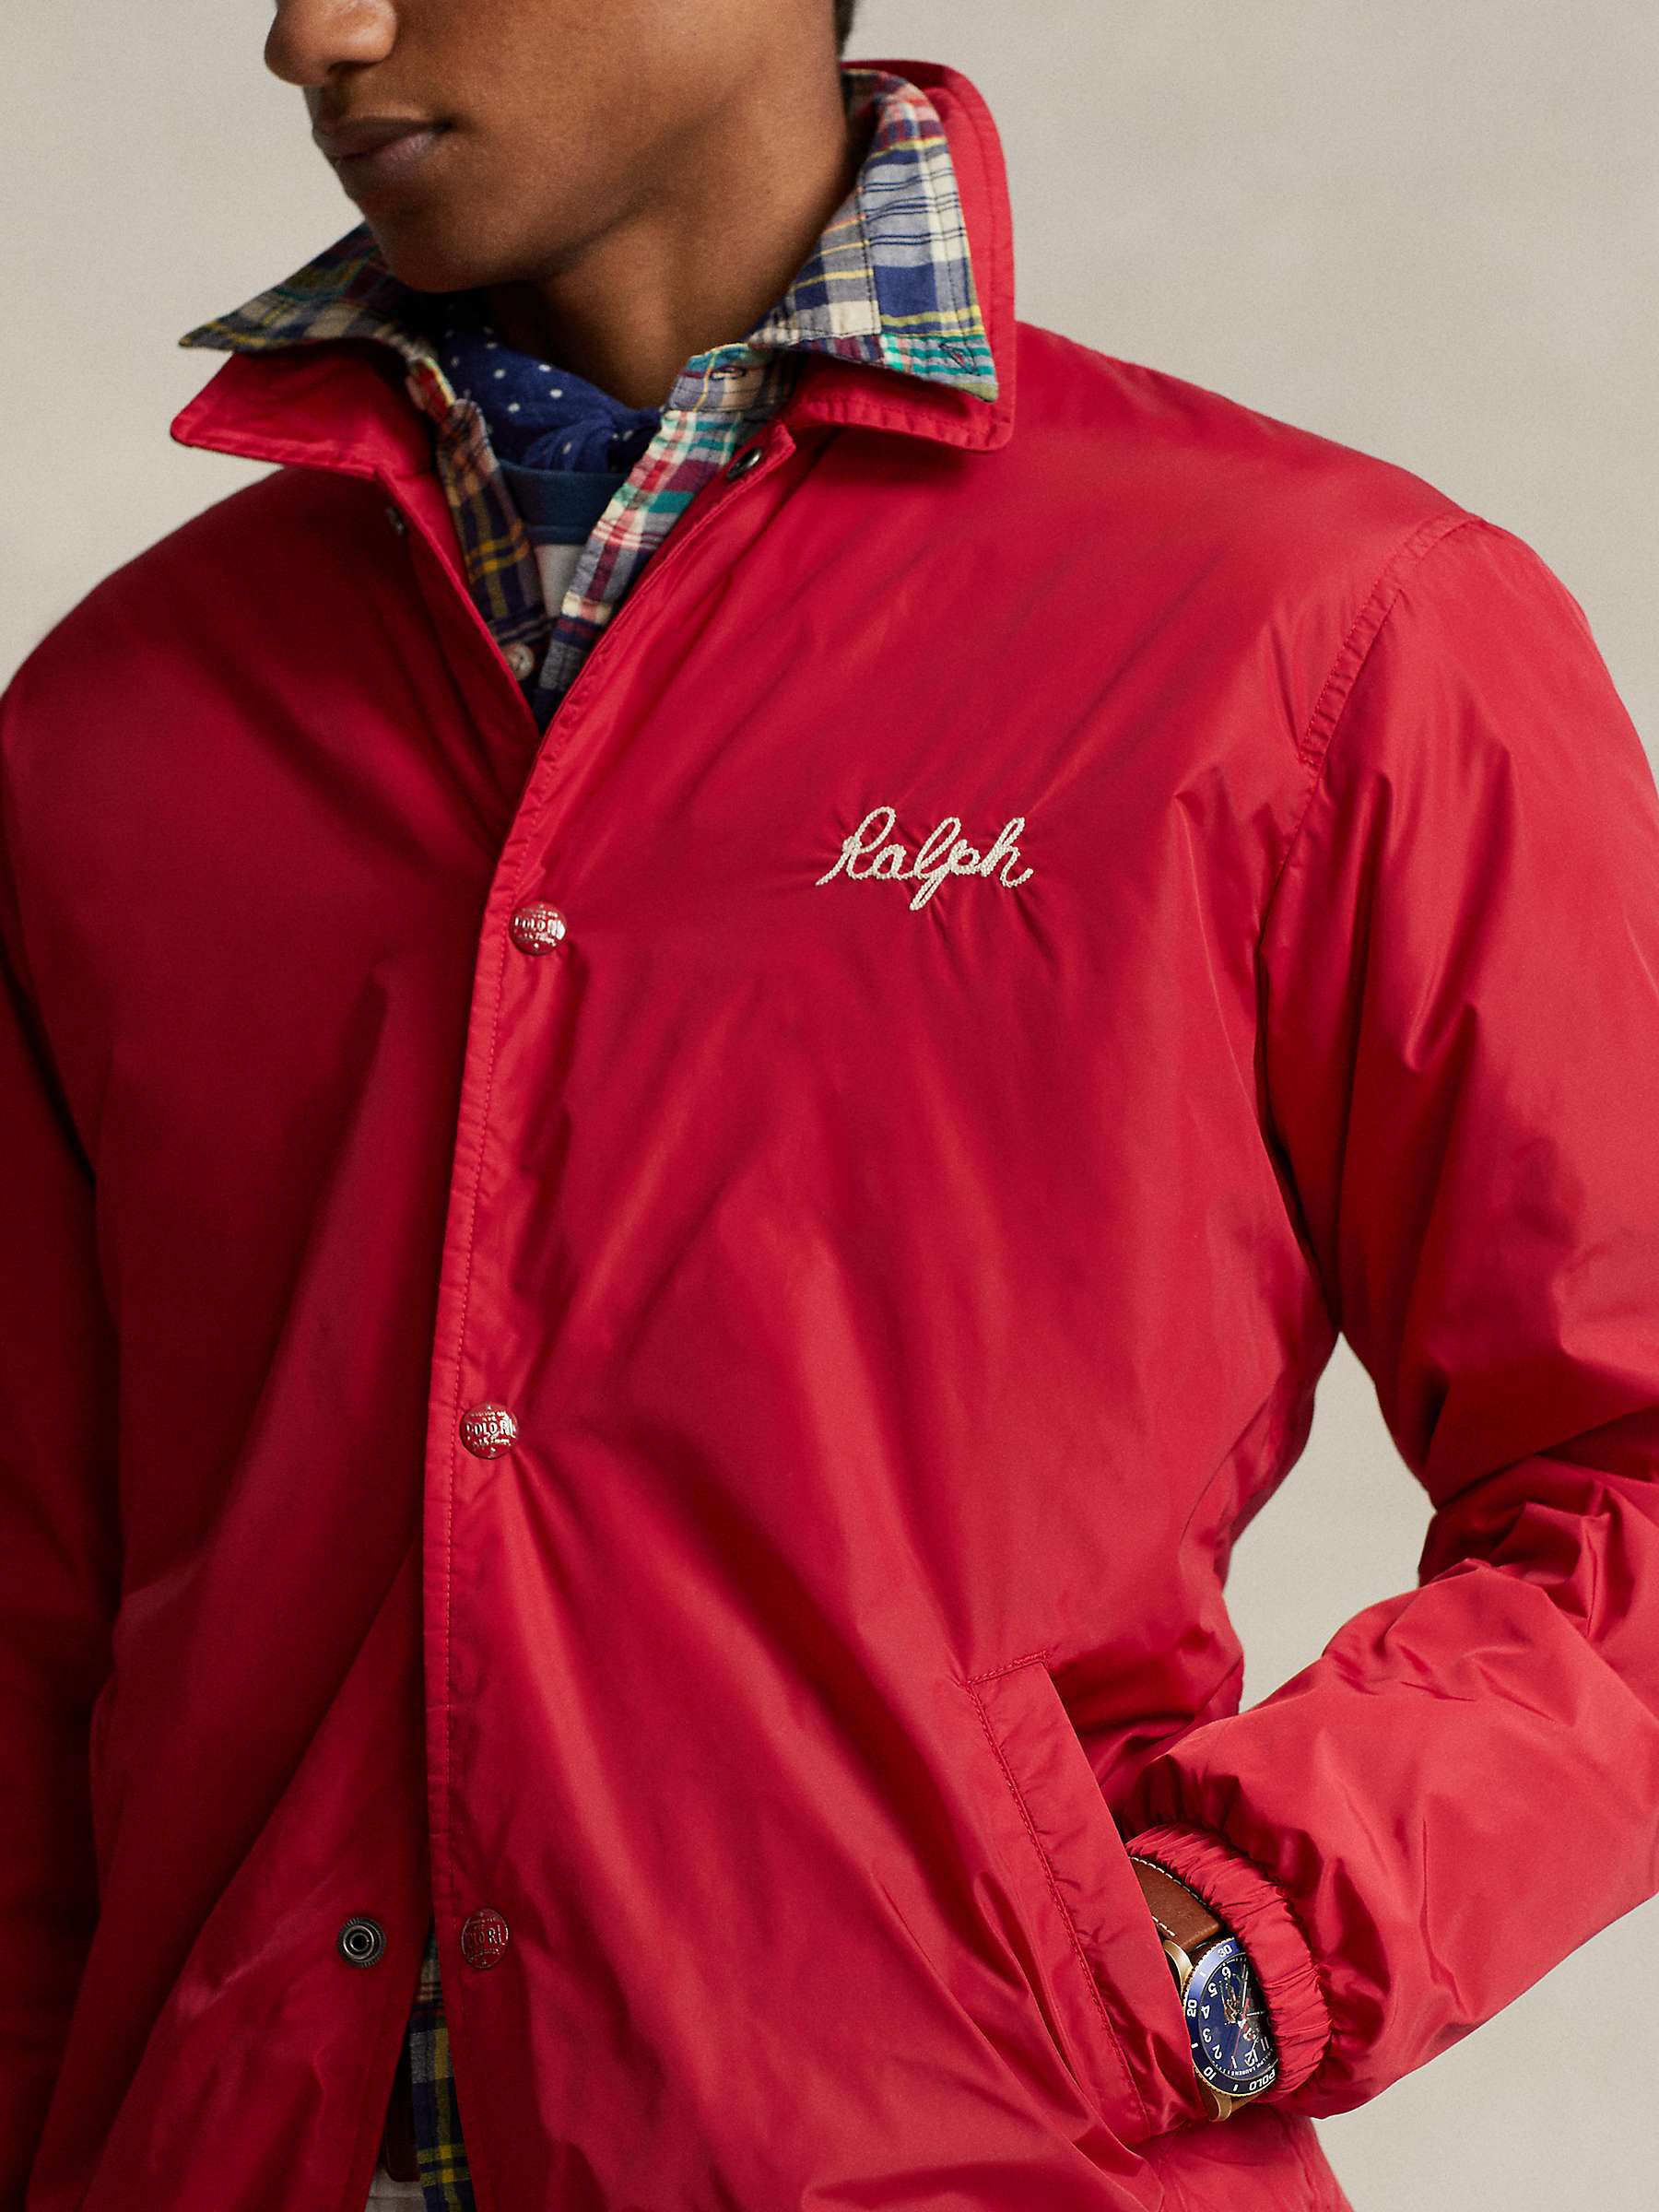 Buy Polo Ralph Lauren Coach Jacket, Red Online at johnlewis.com